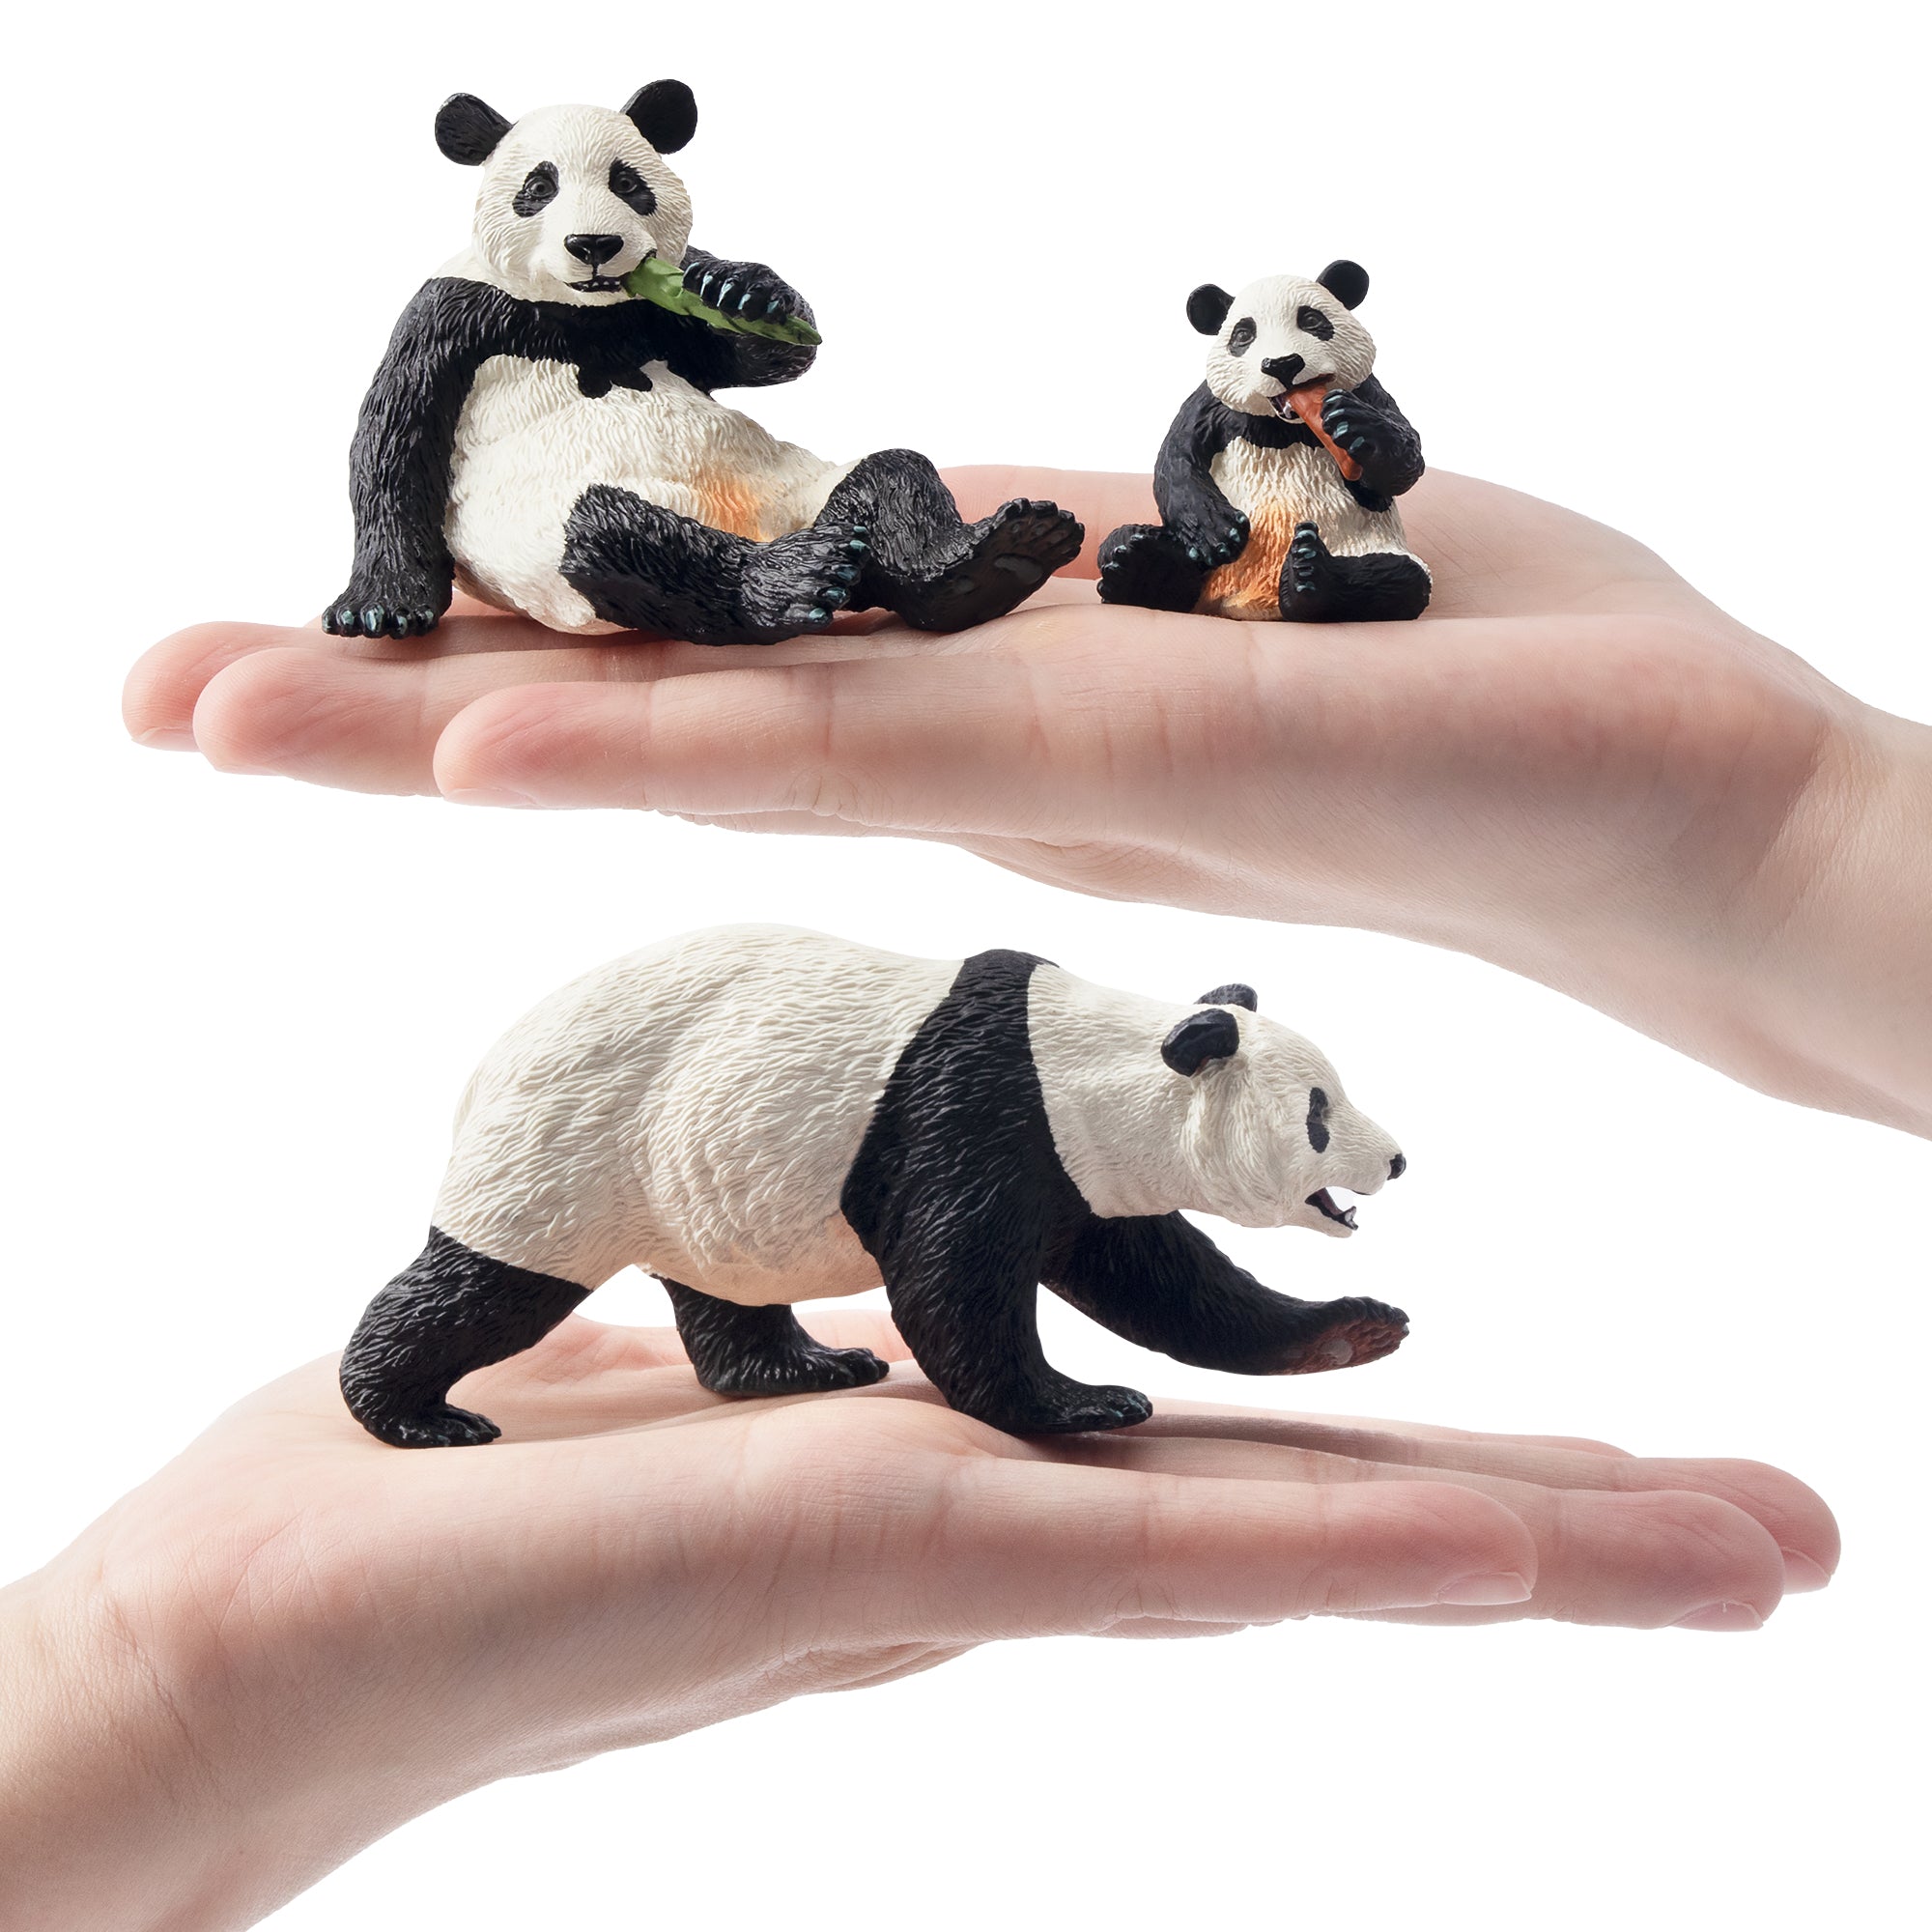 6-Piece Plastic Jungle Panda Animal Figurines Family Set-on hand